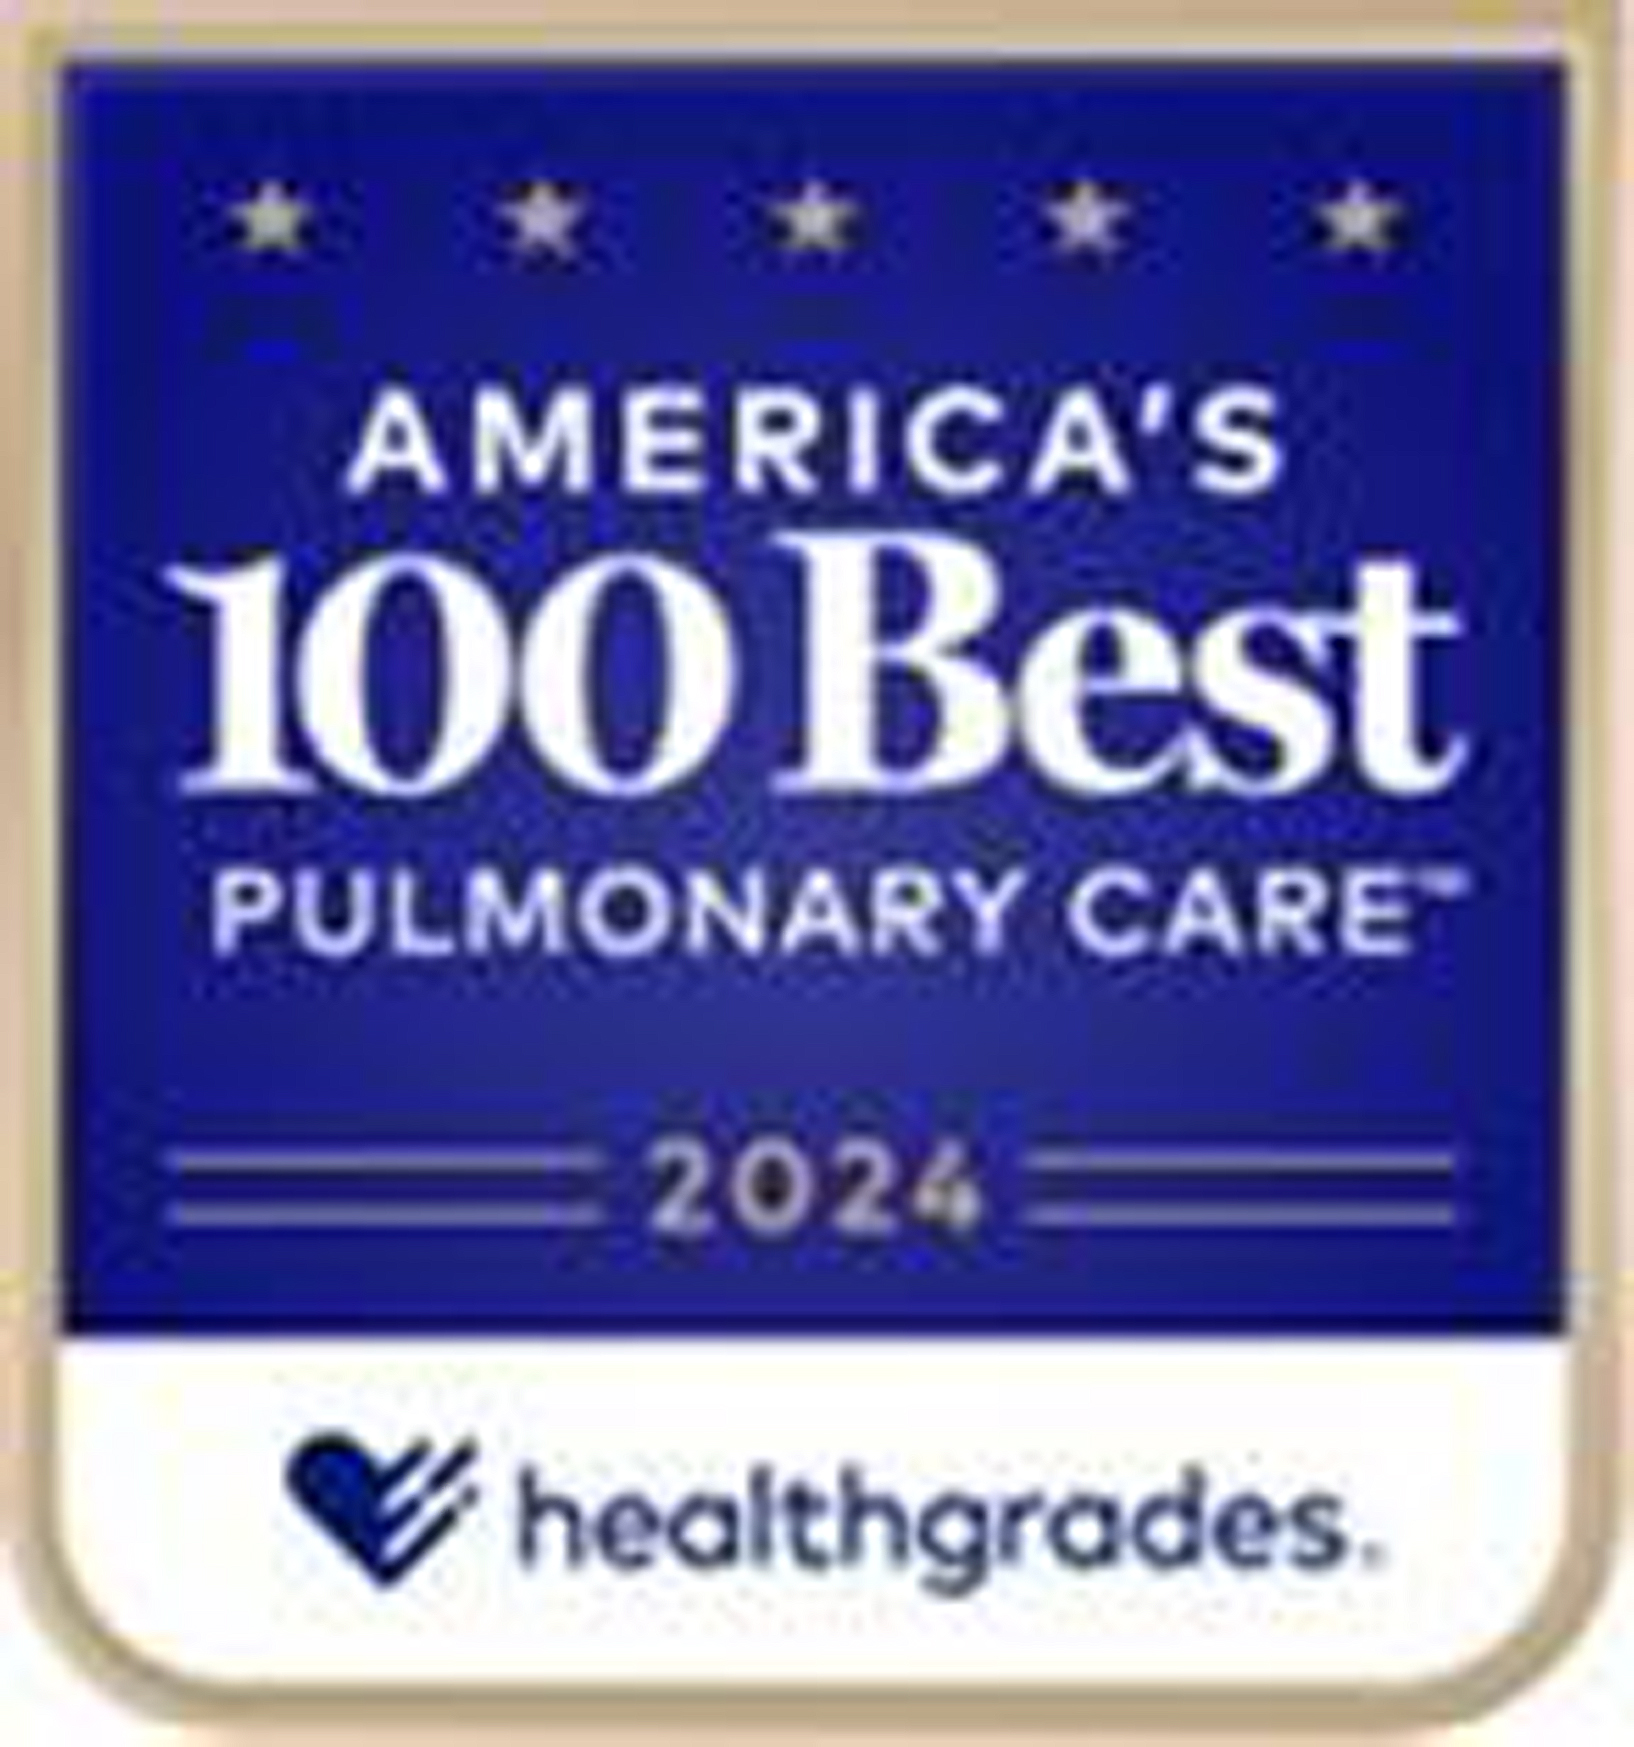 100 best pulmonary care